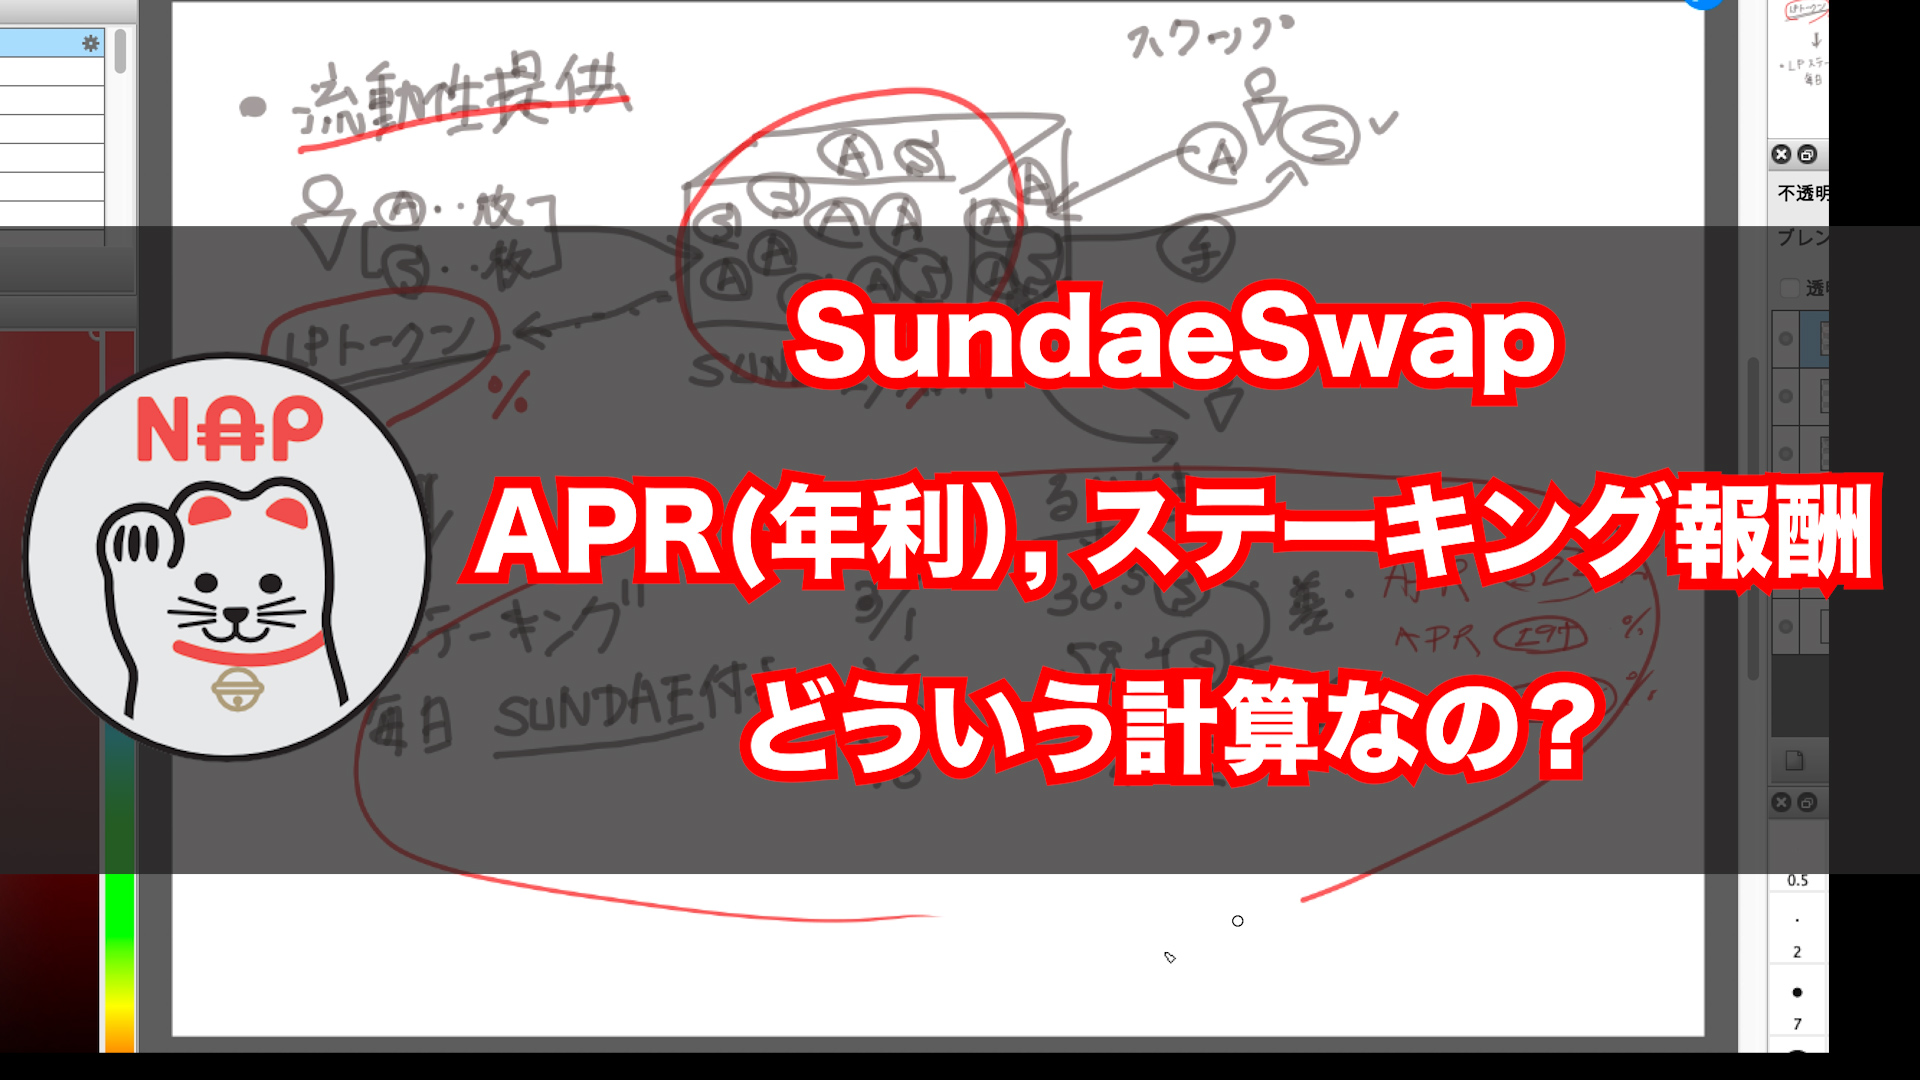 SundaeSwap APR イールドファーミング計算